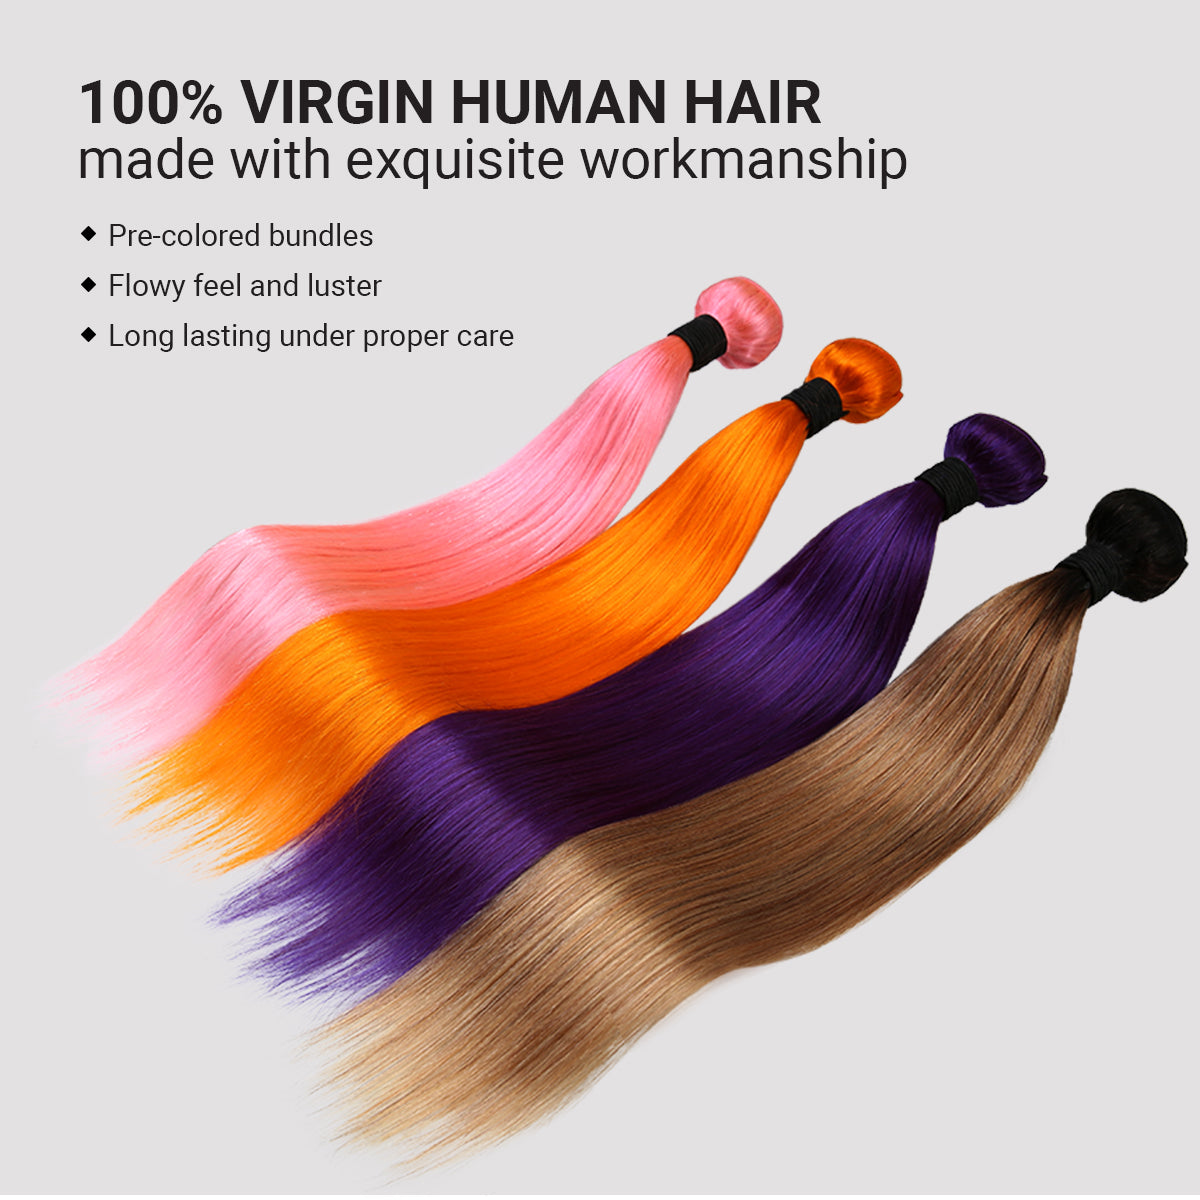 Uniq Hair 100% Virgin Human Hair Brazilian Bundle Hair Weave 9A Straight #ORANGE 3Pcs Find Your New Look Today!